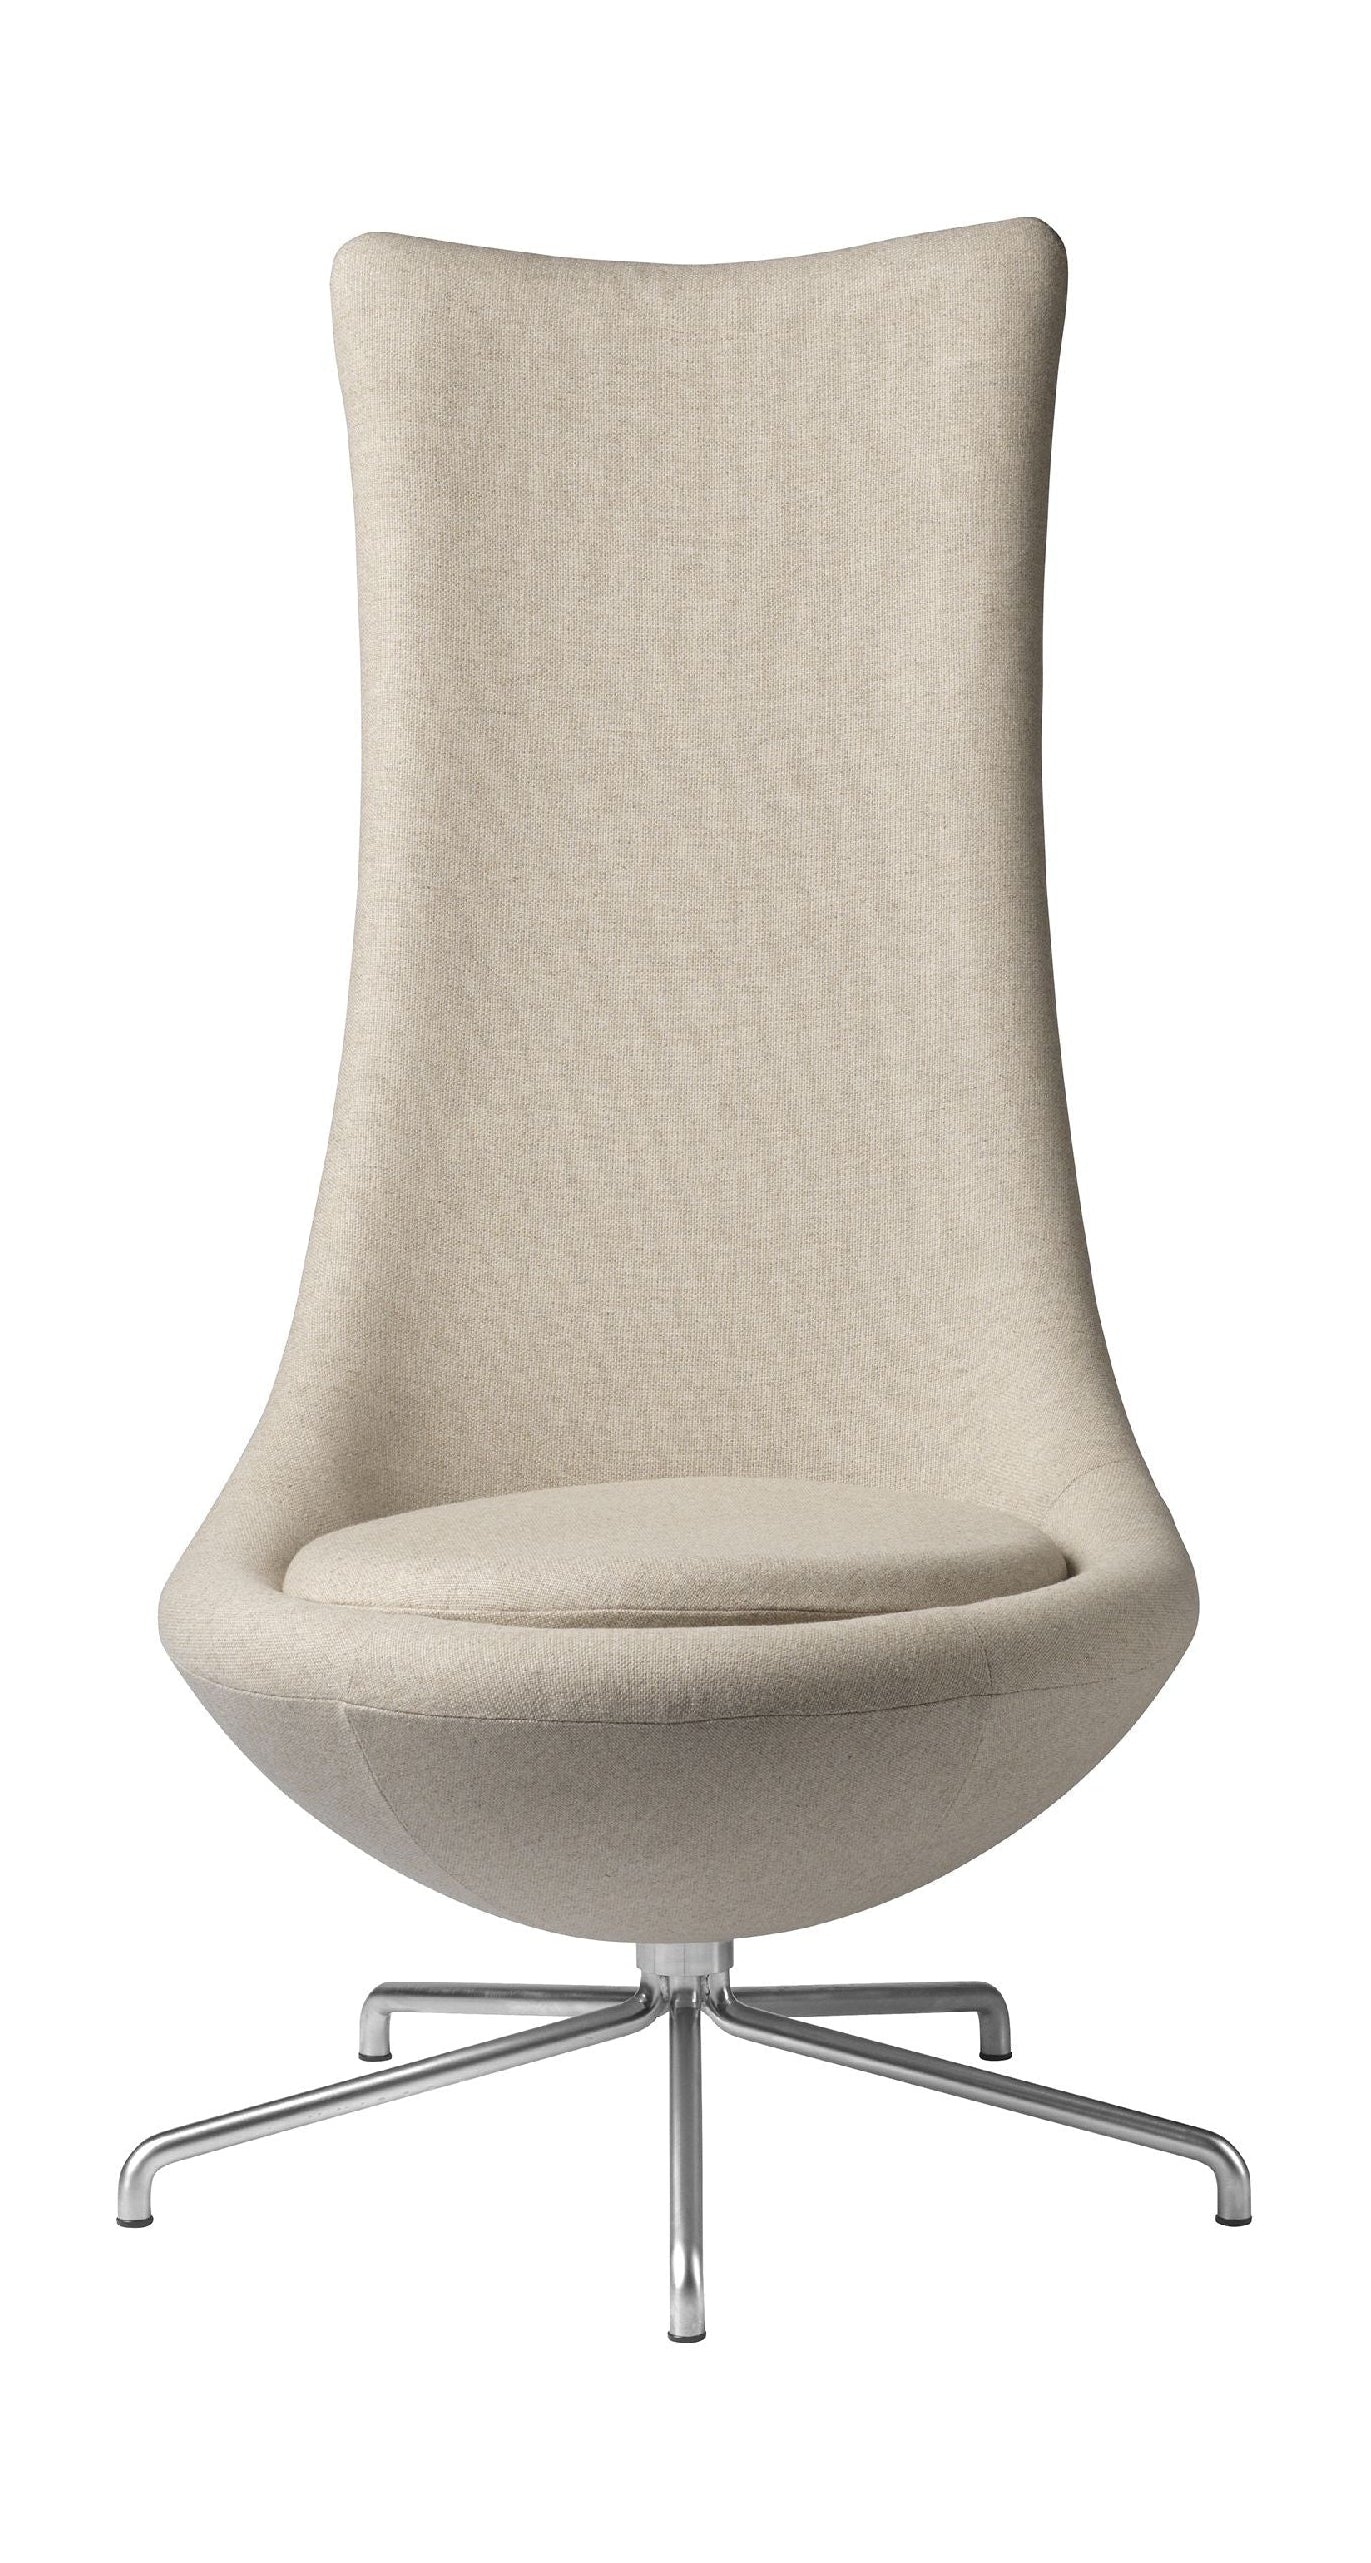 Fdb Møbler L41 Bellamie Lounge Chair With Swivel, Beige/Metal